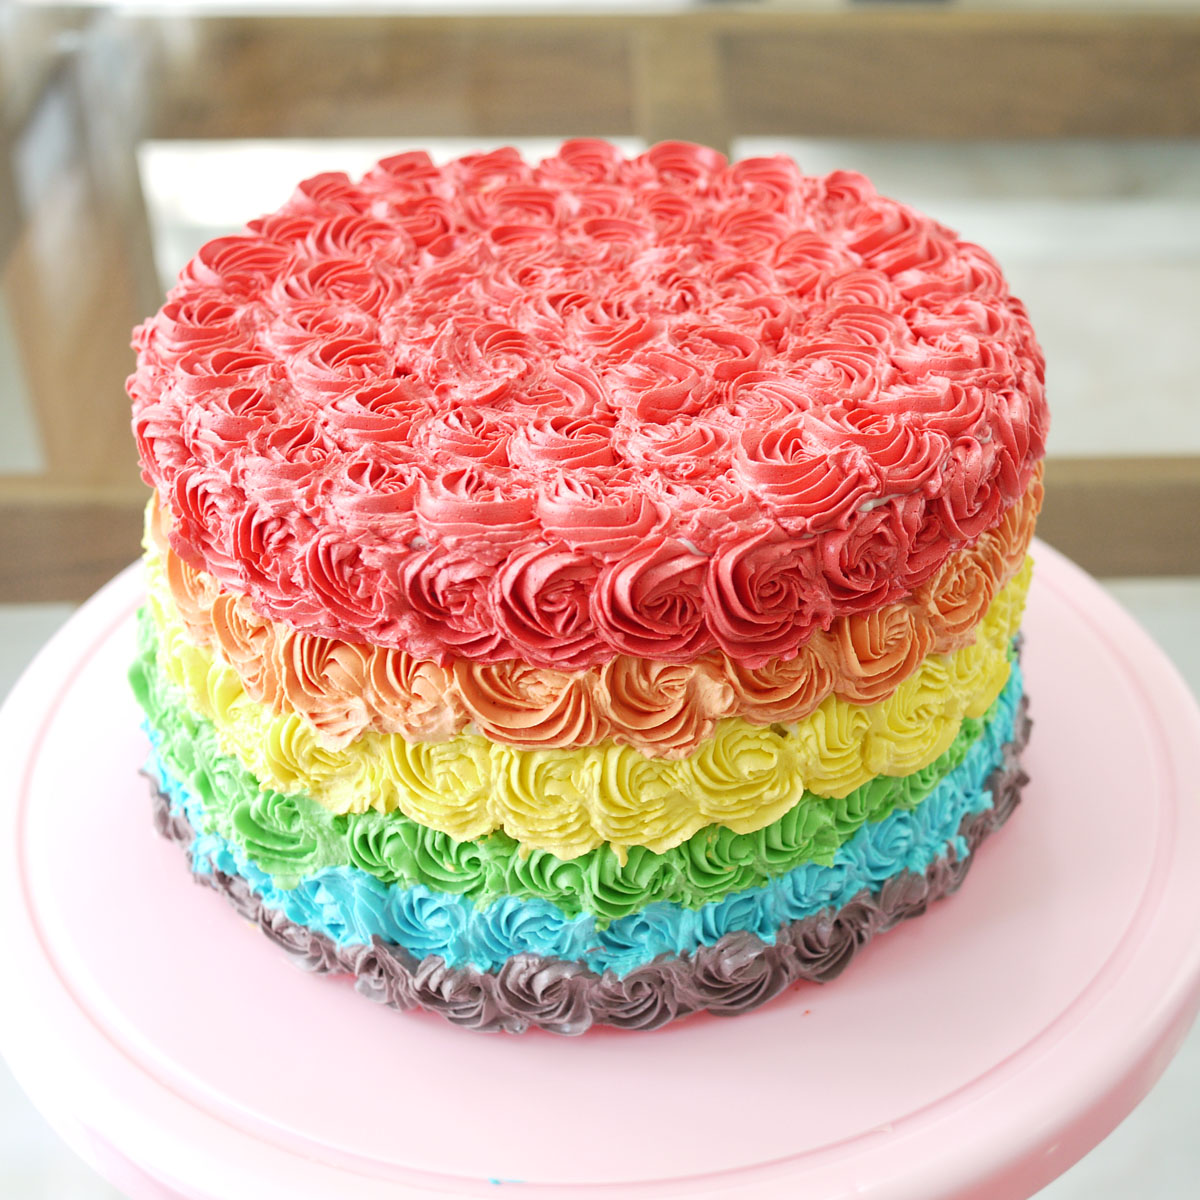 Colorful Cake Designs 8